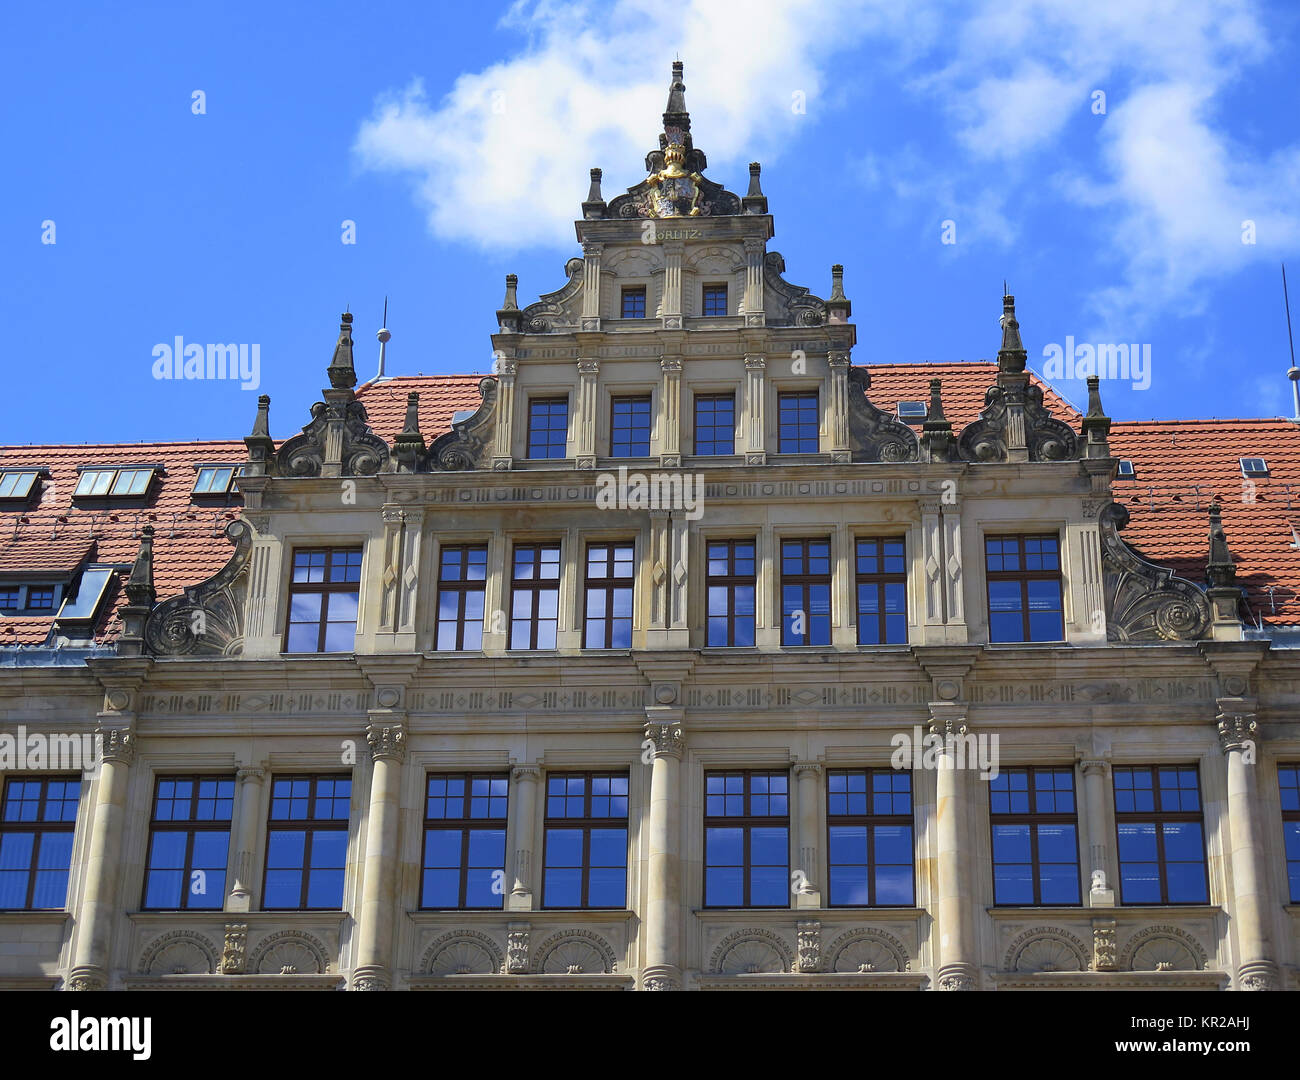 Town house, Old Town, G?rlitz, Saxon, Germany, Buergerhaus, Altstadt, Goerlitz, Sachsen, Deutschland Stock Photo